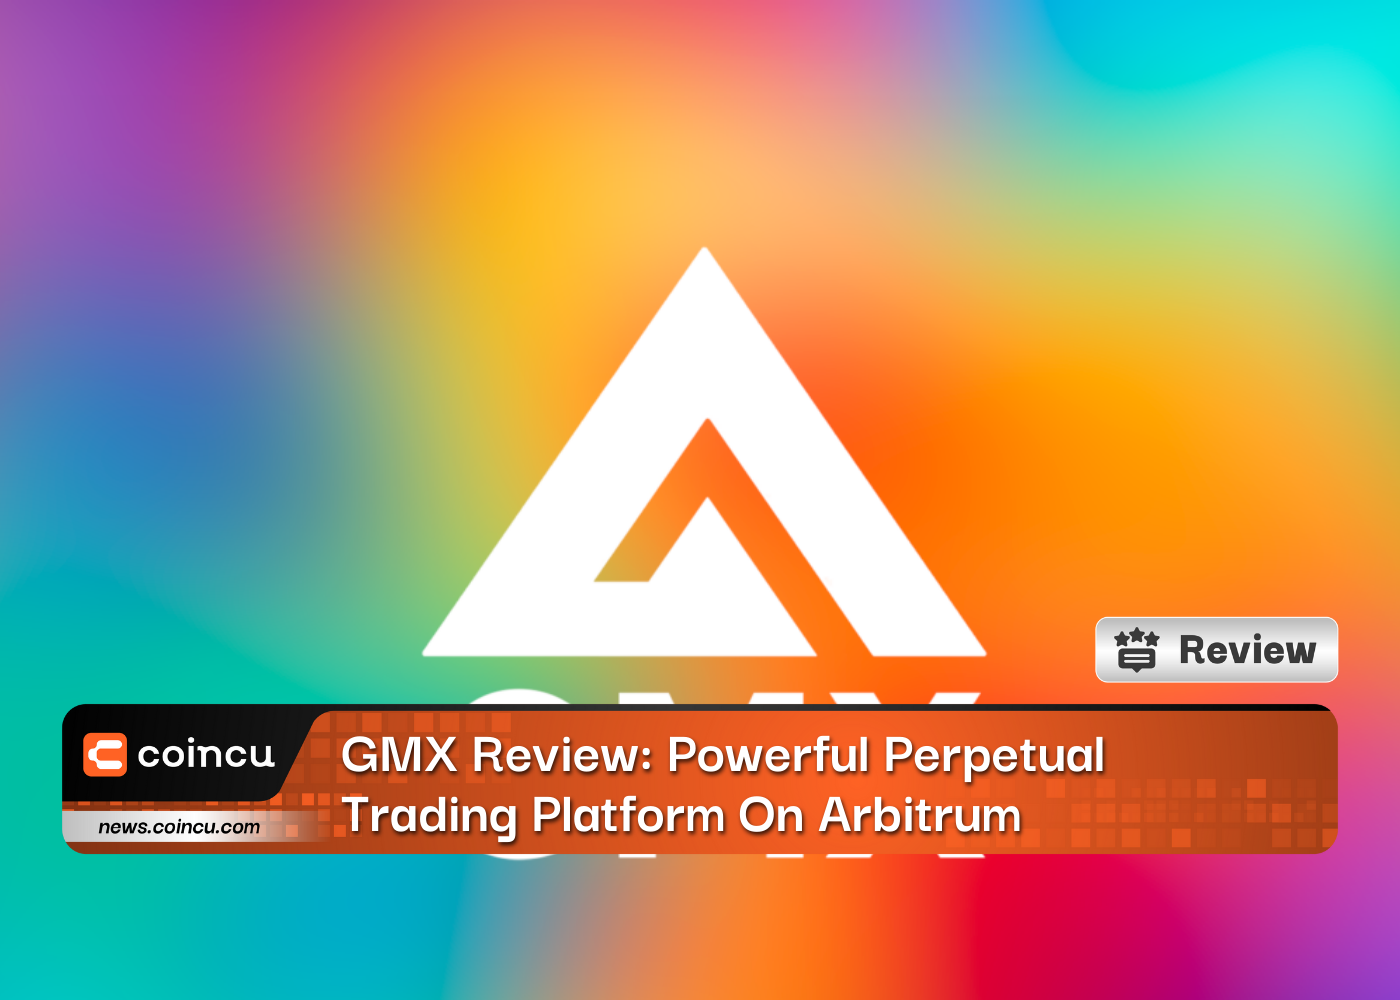 GMX Review: Powerful Perpetual Trading Platform On Arbitrum